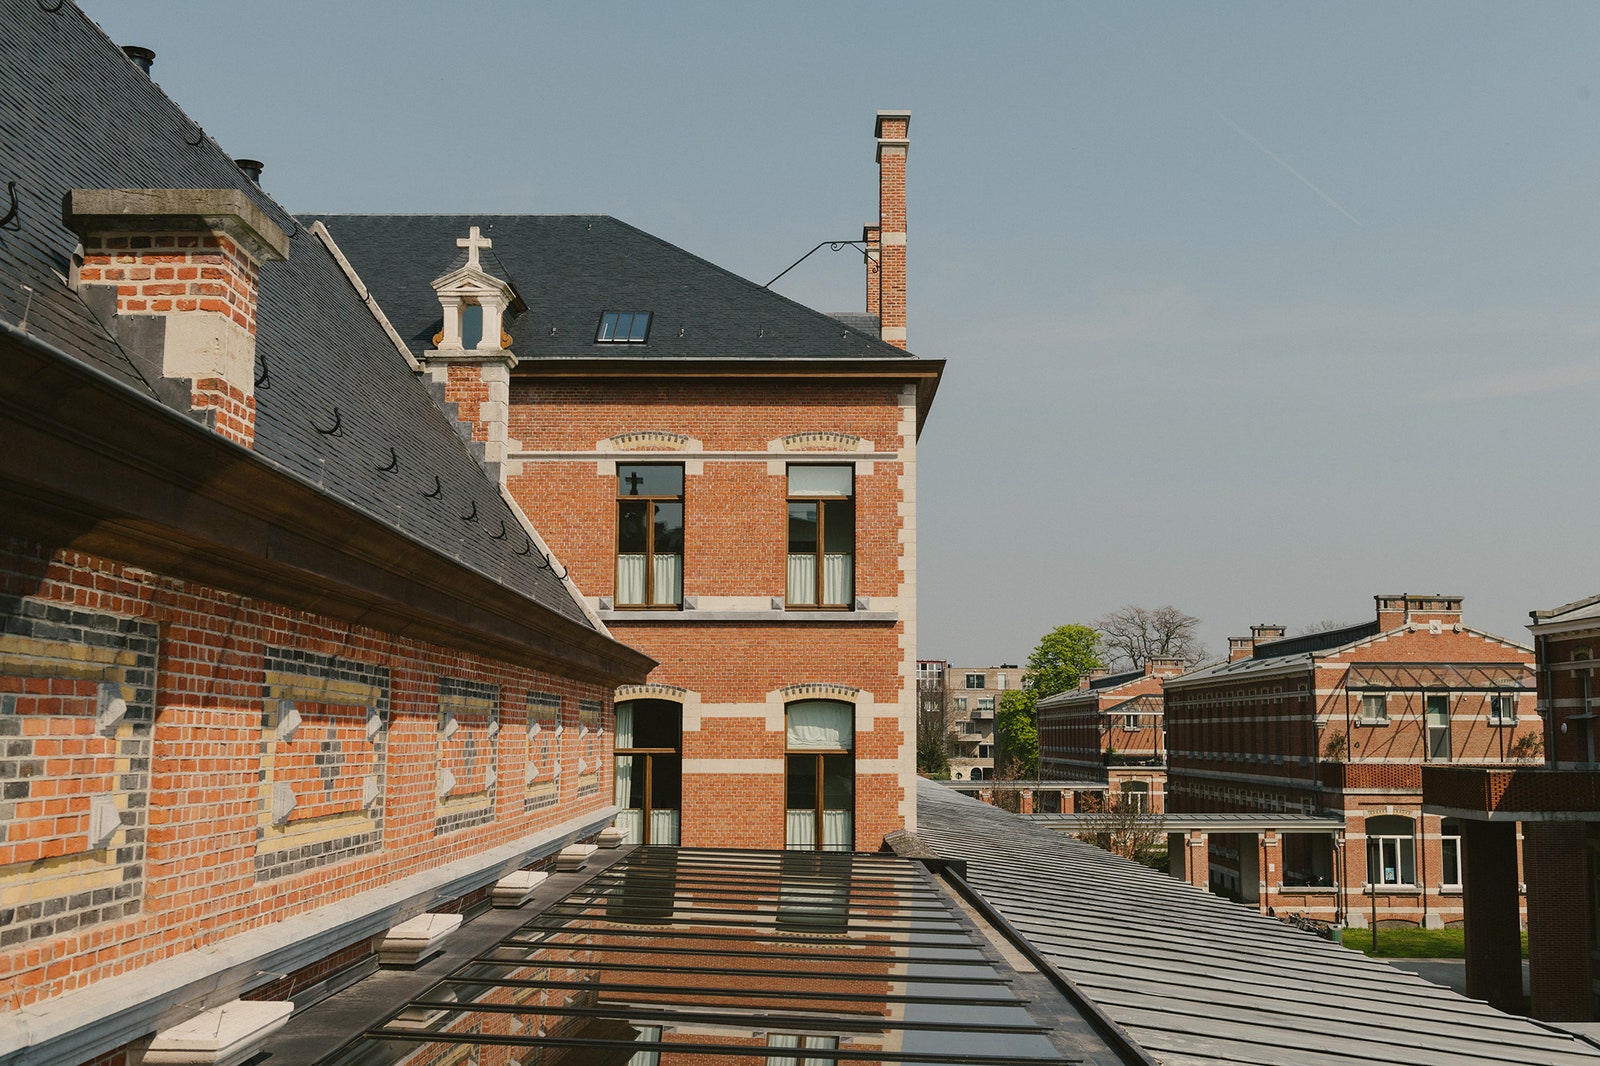 Отель August Hotel в Антверпене по проекту Винсента ван Дуйсена